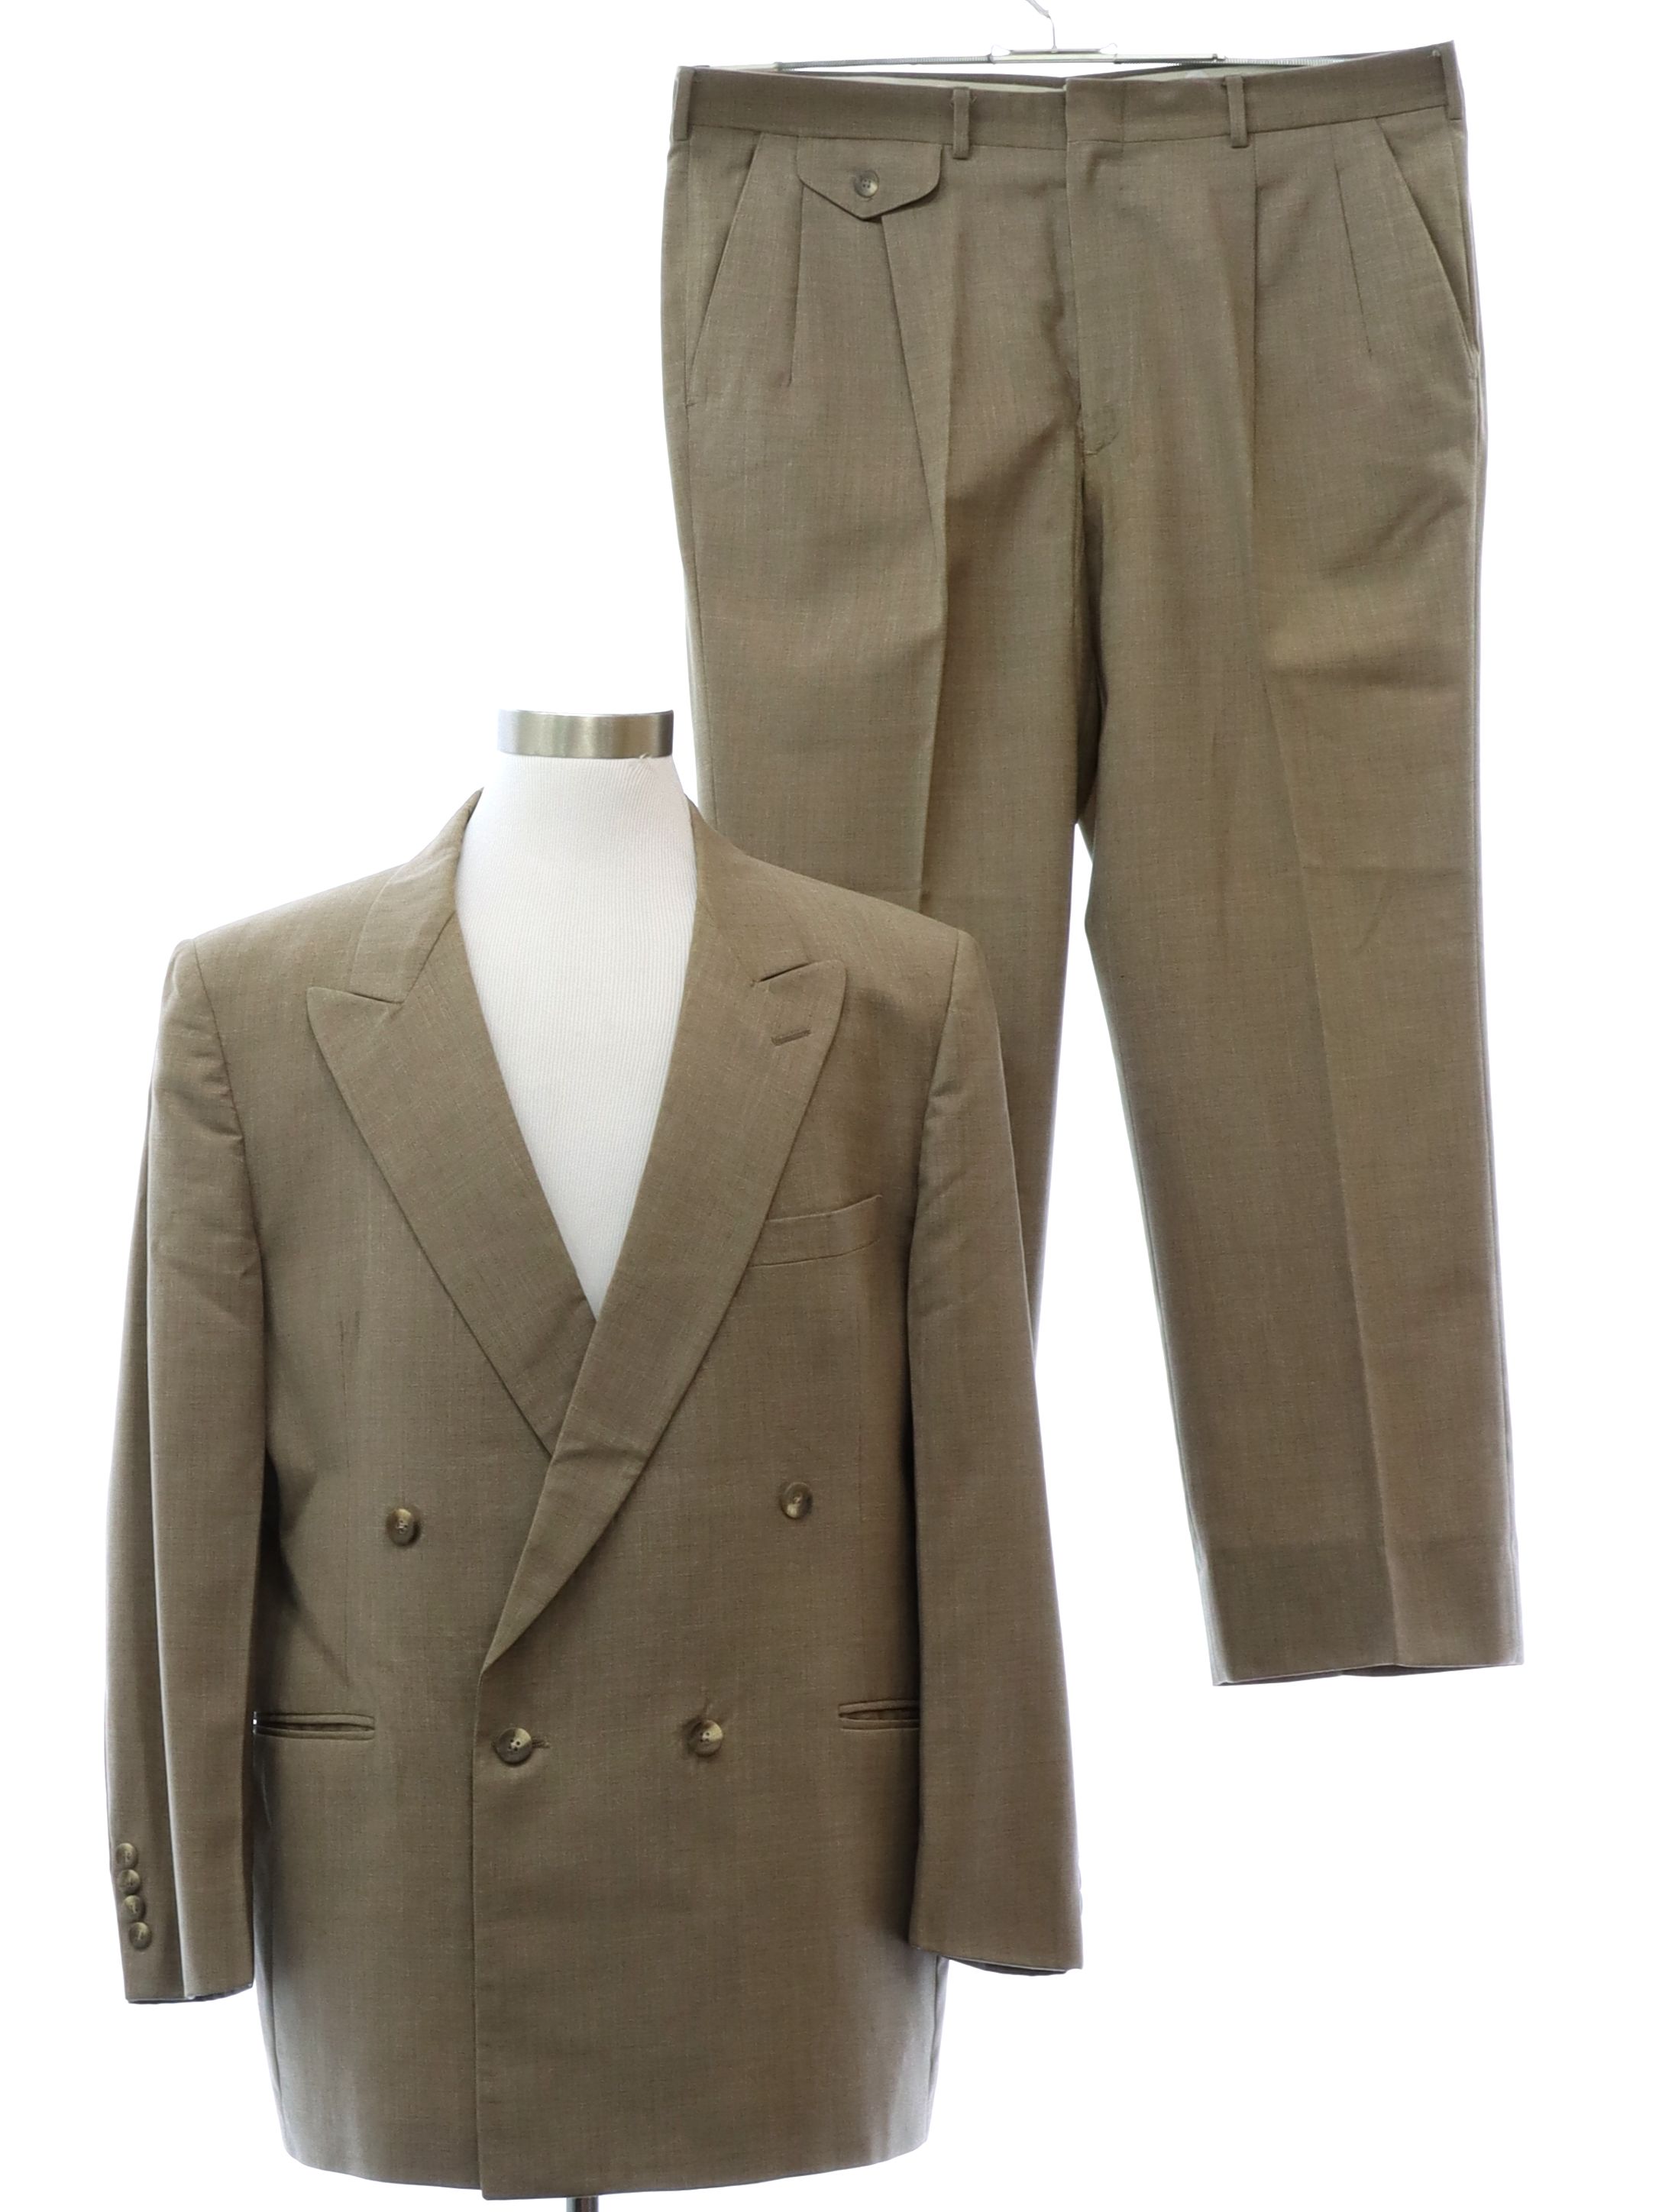 Vintage Clueless Style 90s Y2K Seduction Fashion Business Suit Jacket &  Skirt | eBay